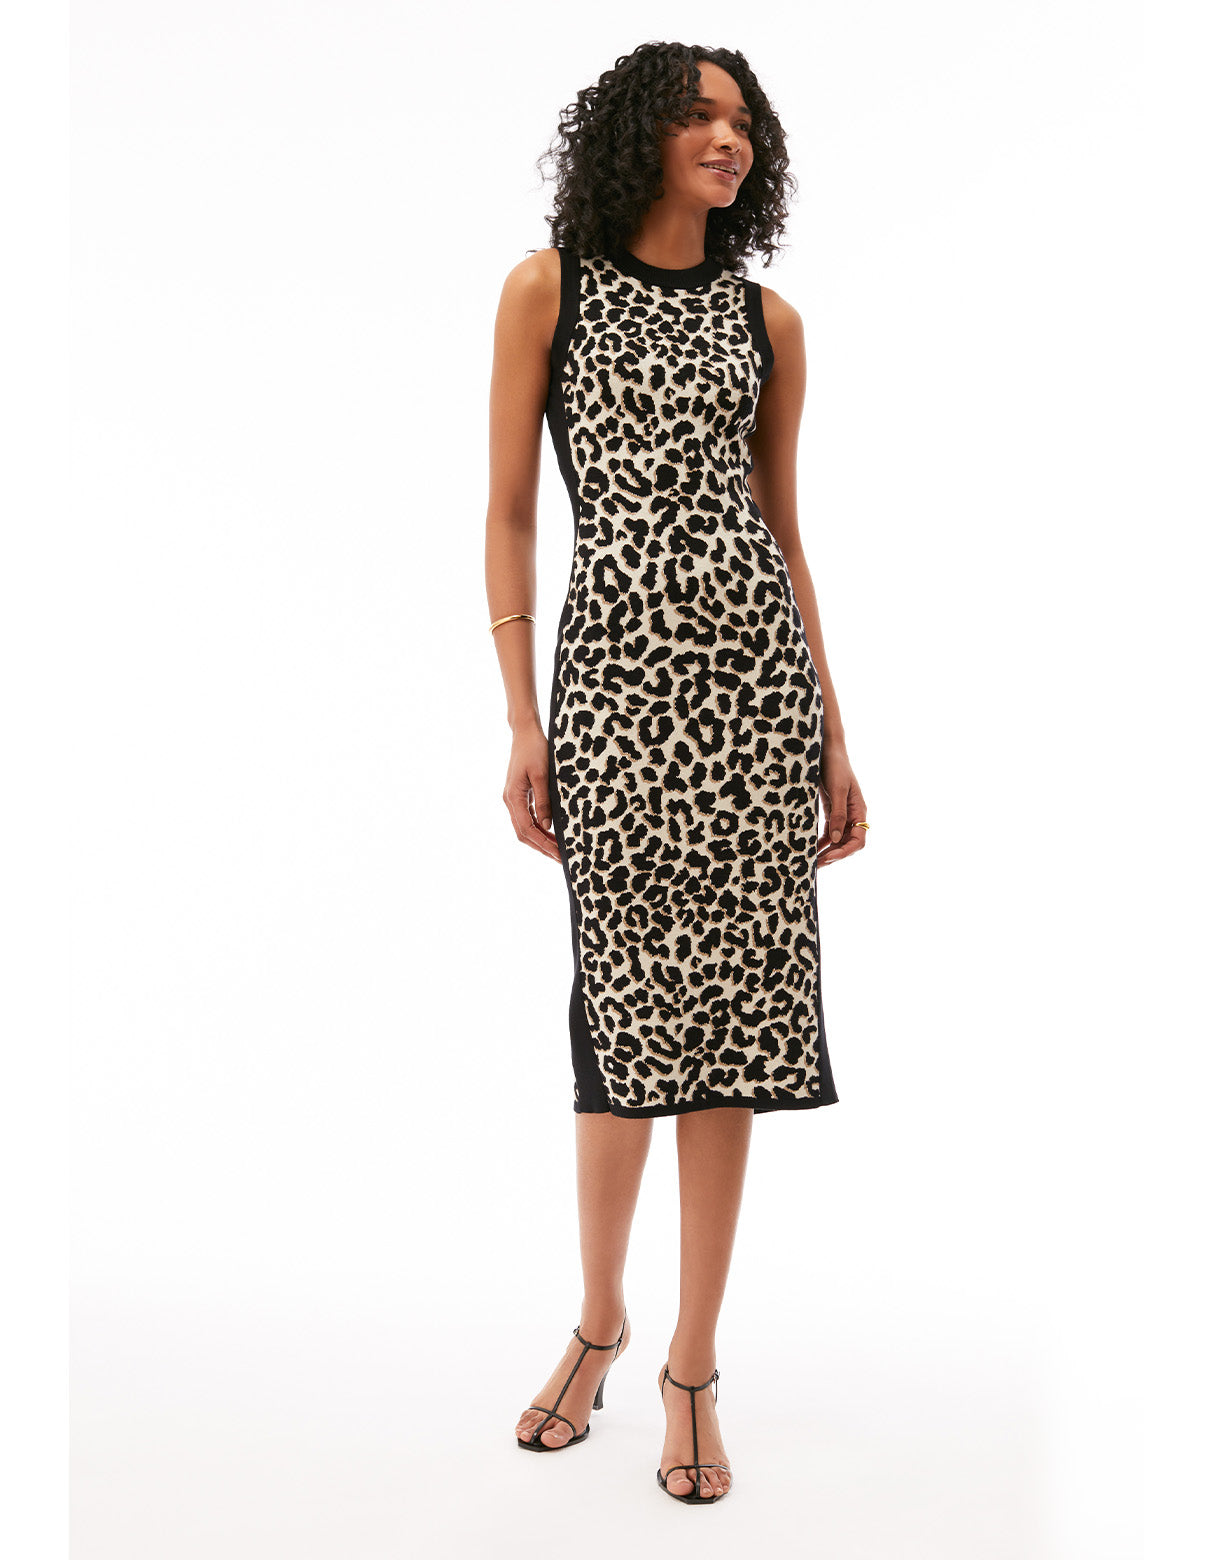 meggie leopard sleeveless sheath knit midi dress bodycon - figure flattering office to date night dresses for women